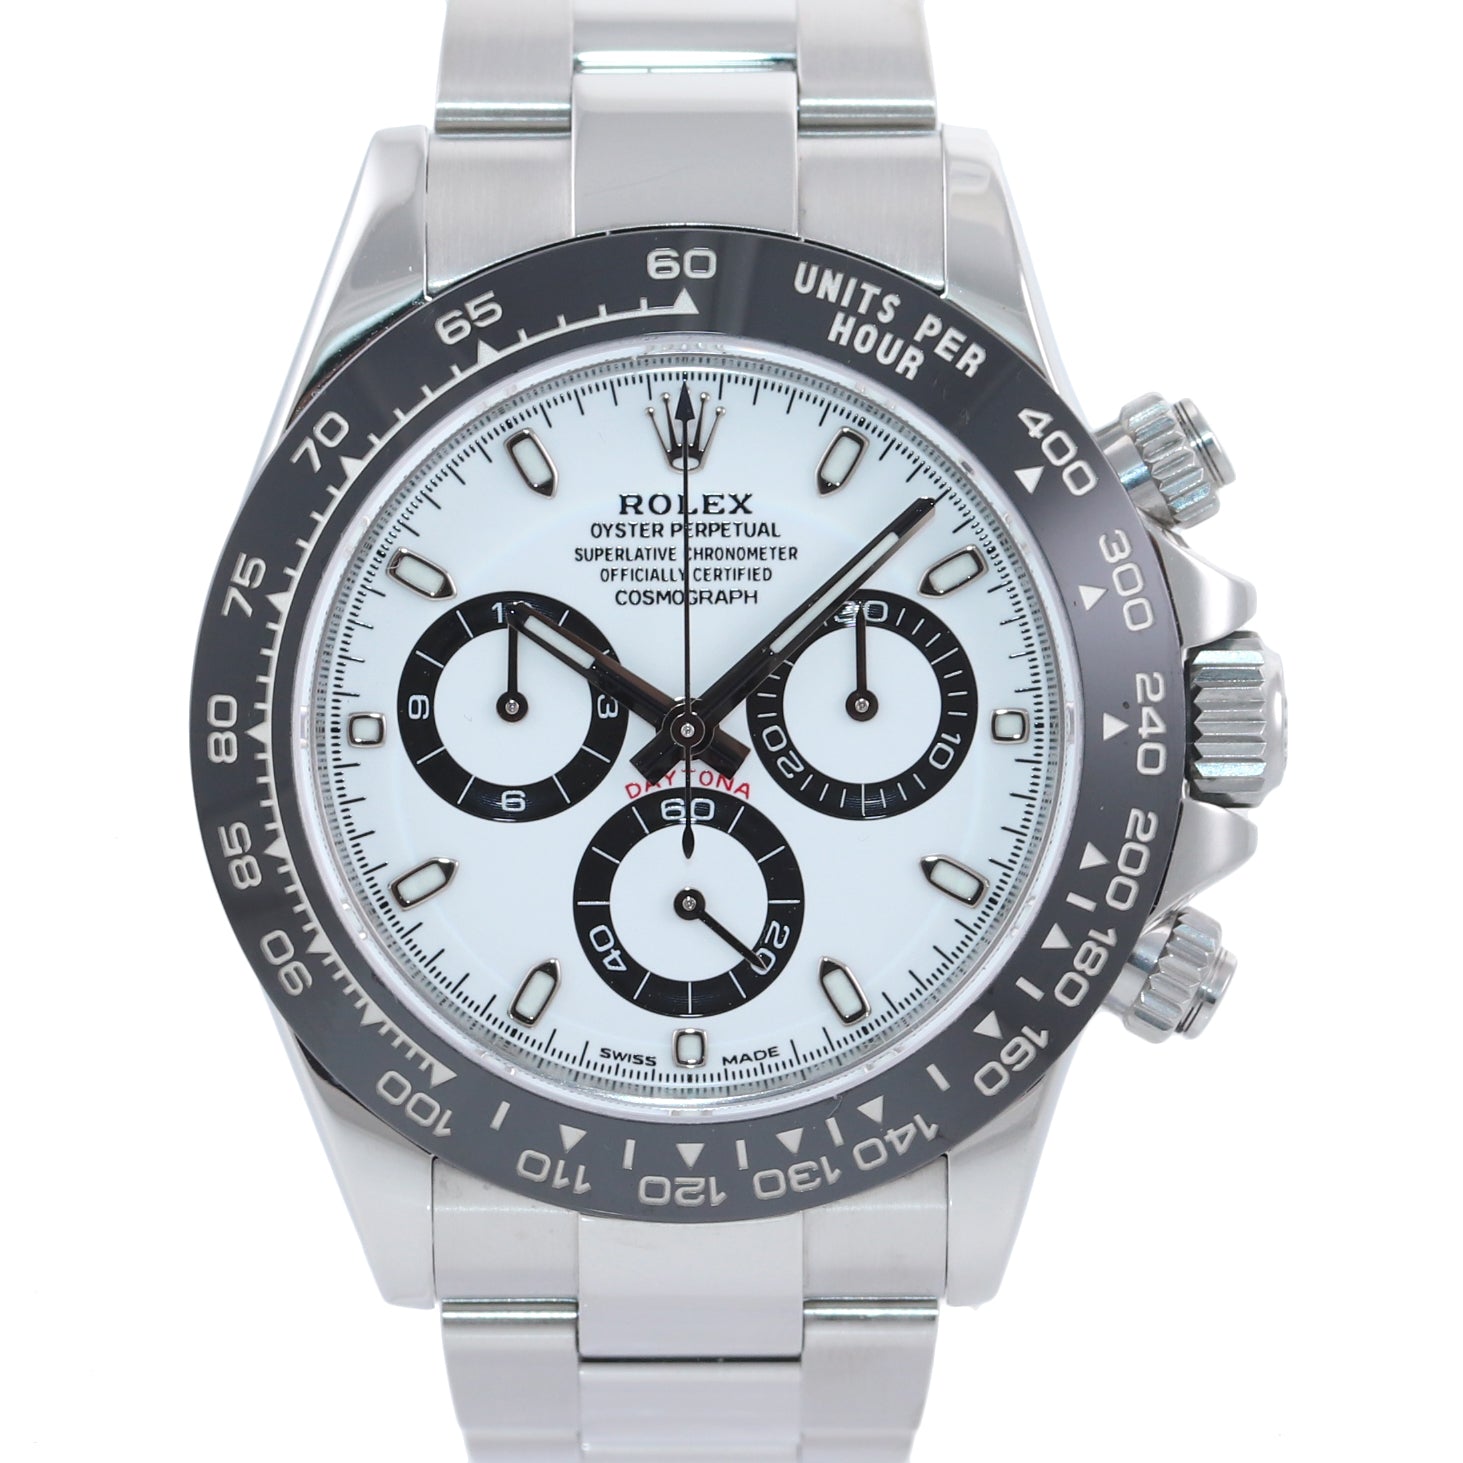 2020 NEW PAPERS Rolex Daytona 116500LN White Ceramic Panda Chrono Steel Watch